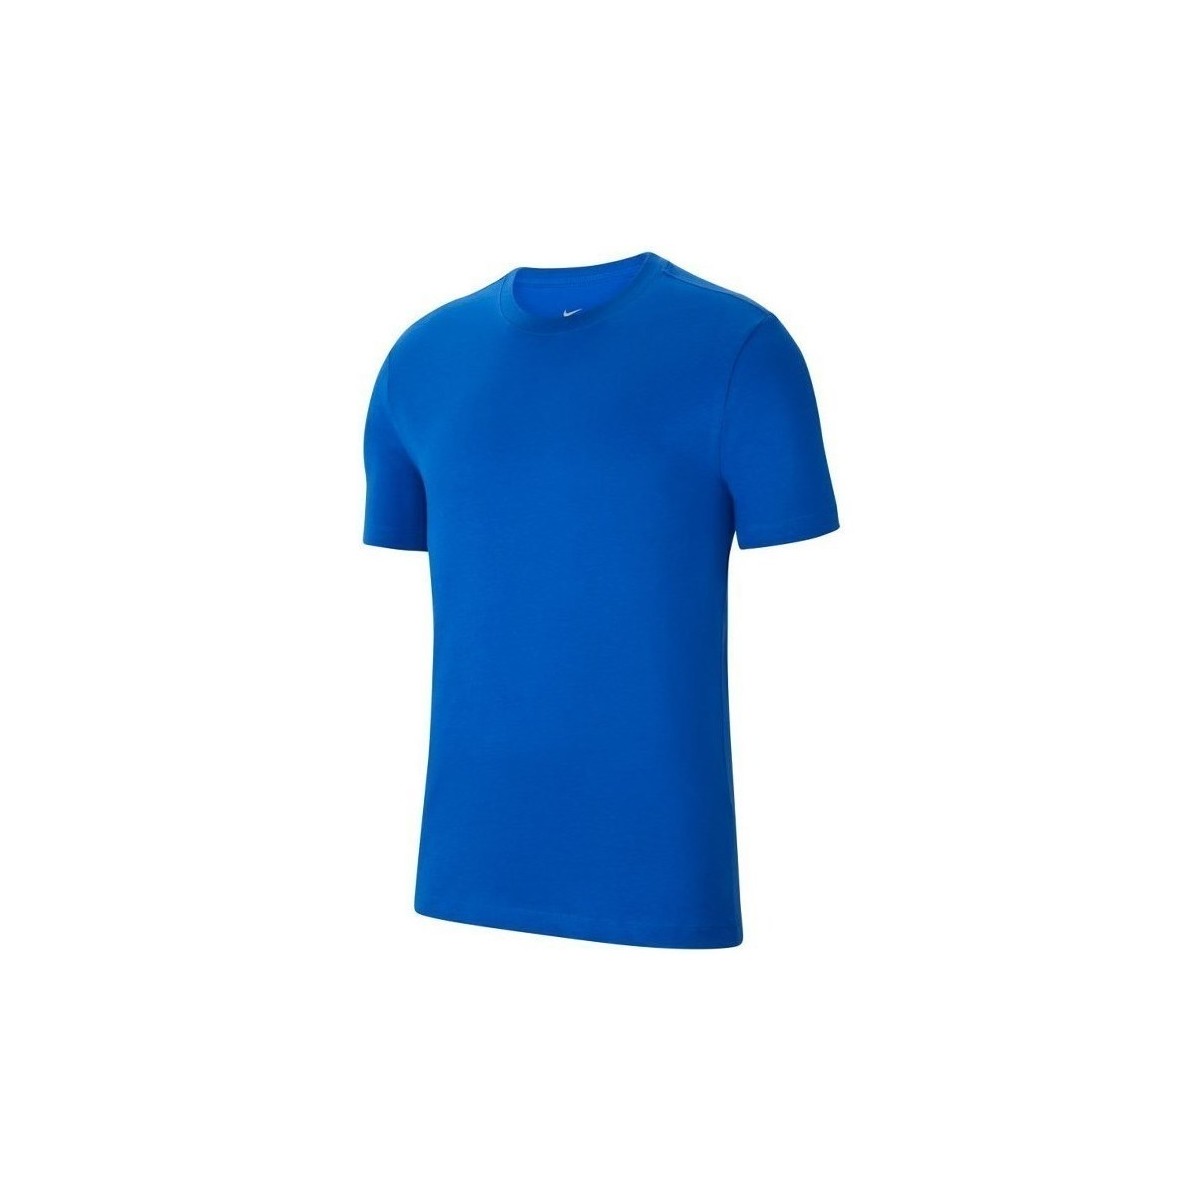 Textil Muži Trička s krátkým rukávem Nike Park 20 Tee Modrá